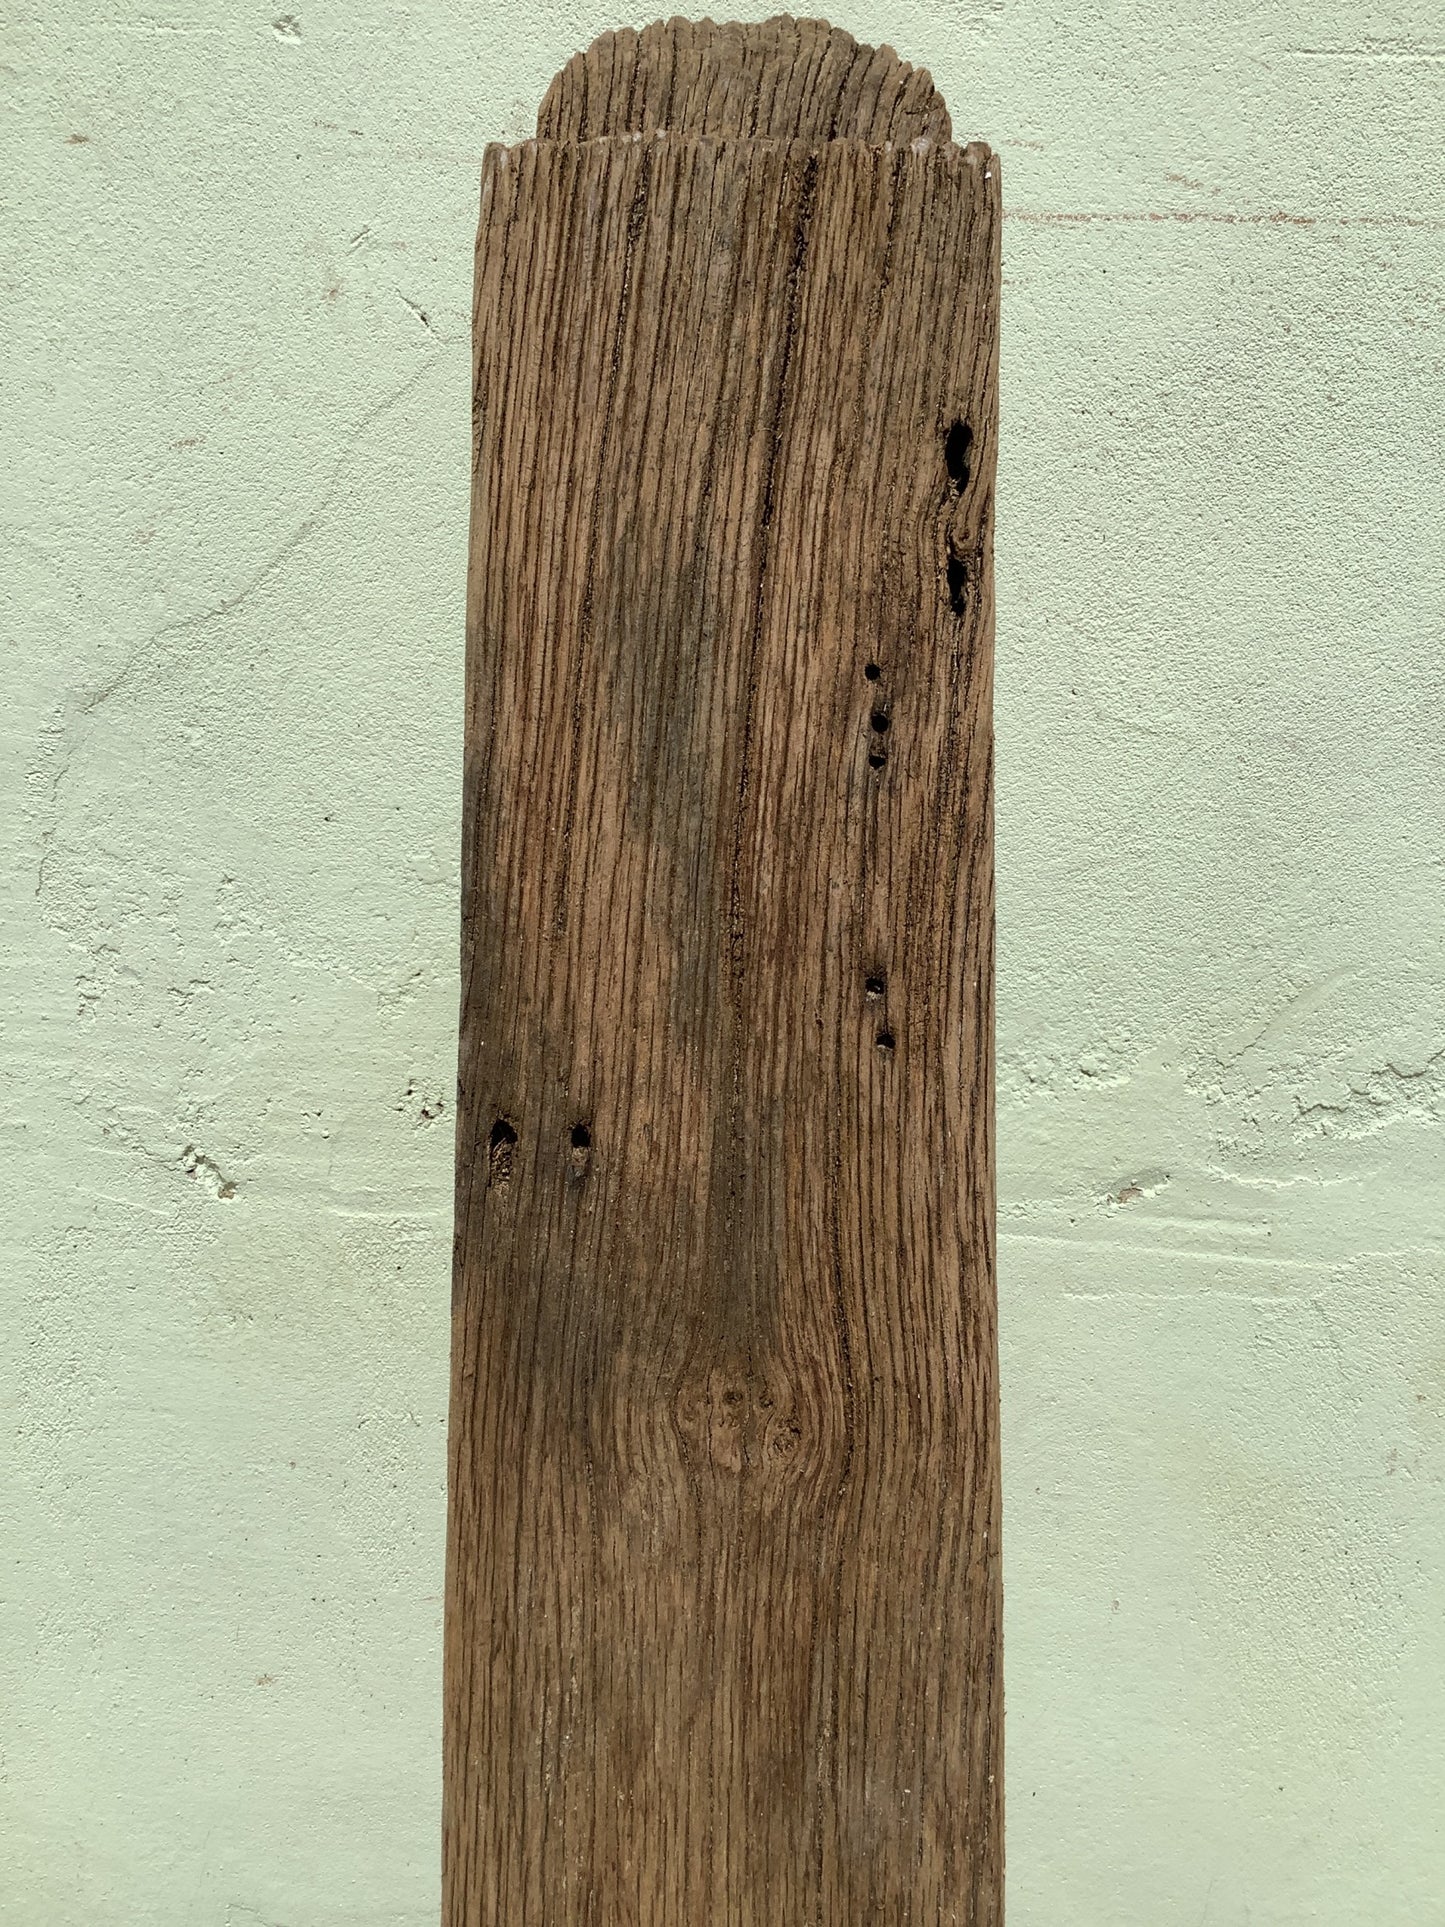 3'9" Long Old Solid English Oak Reclaimed Seasoned Rustic Fireplace Beam Post